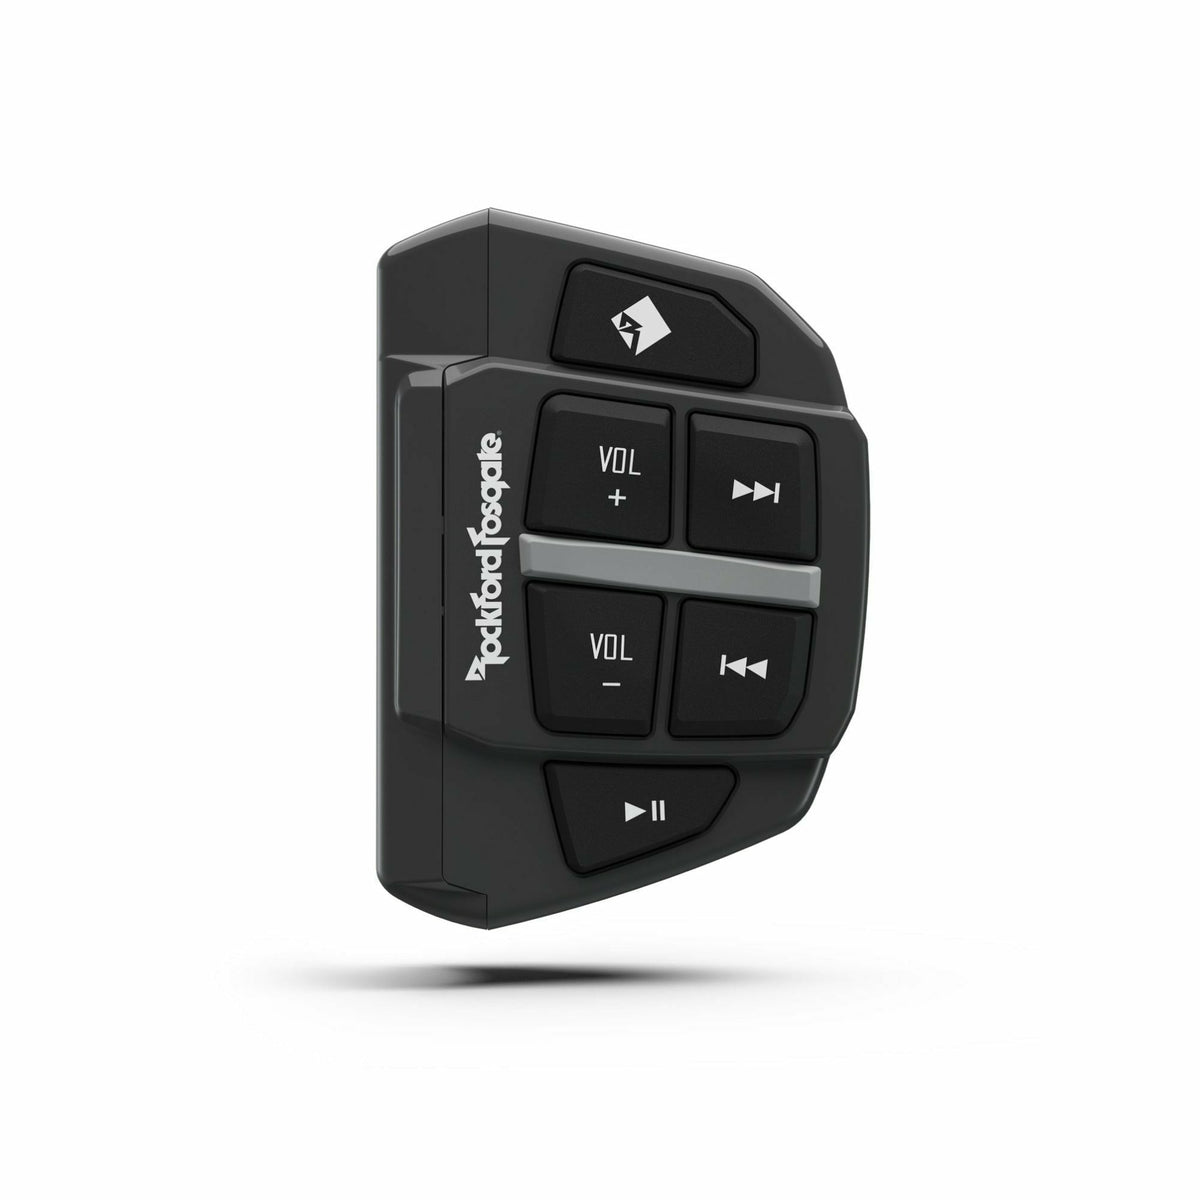 Rockford Fosgate Bluetooth Universal Remote